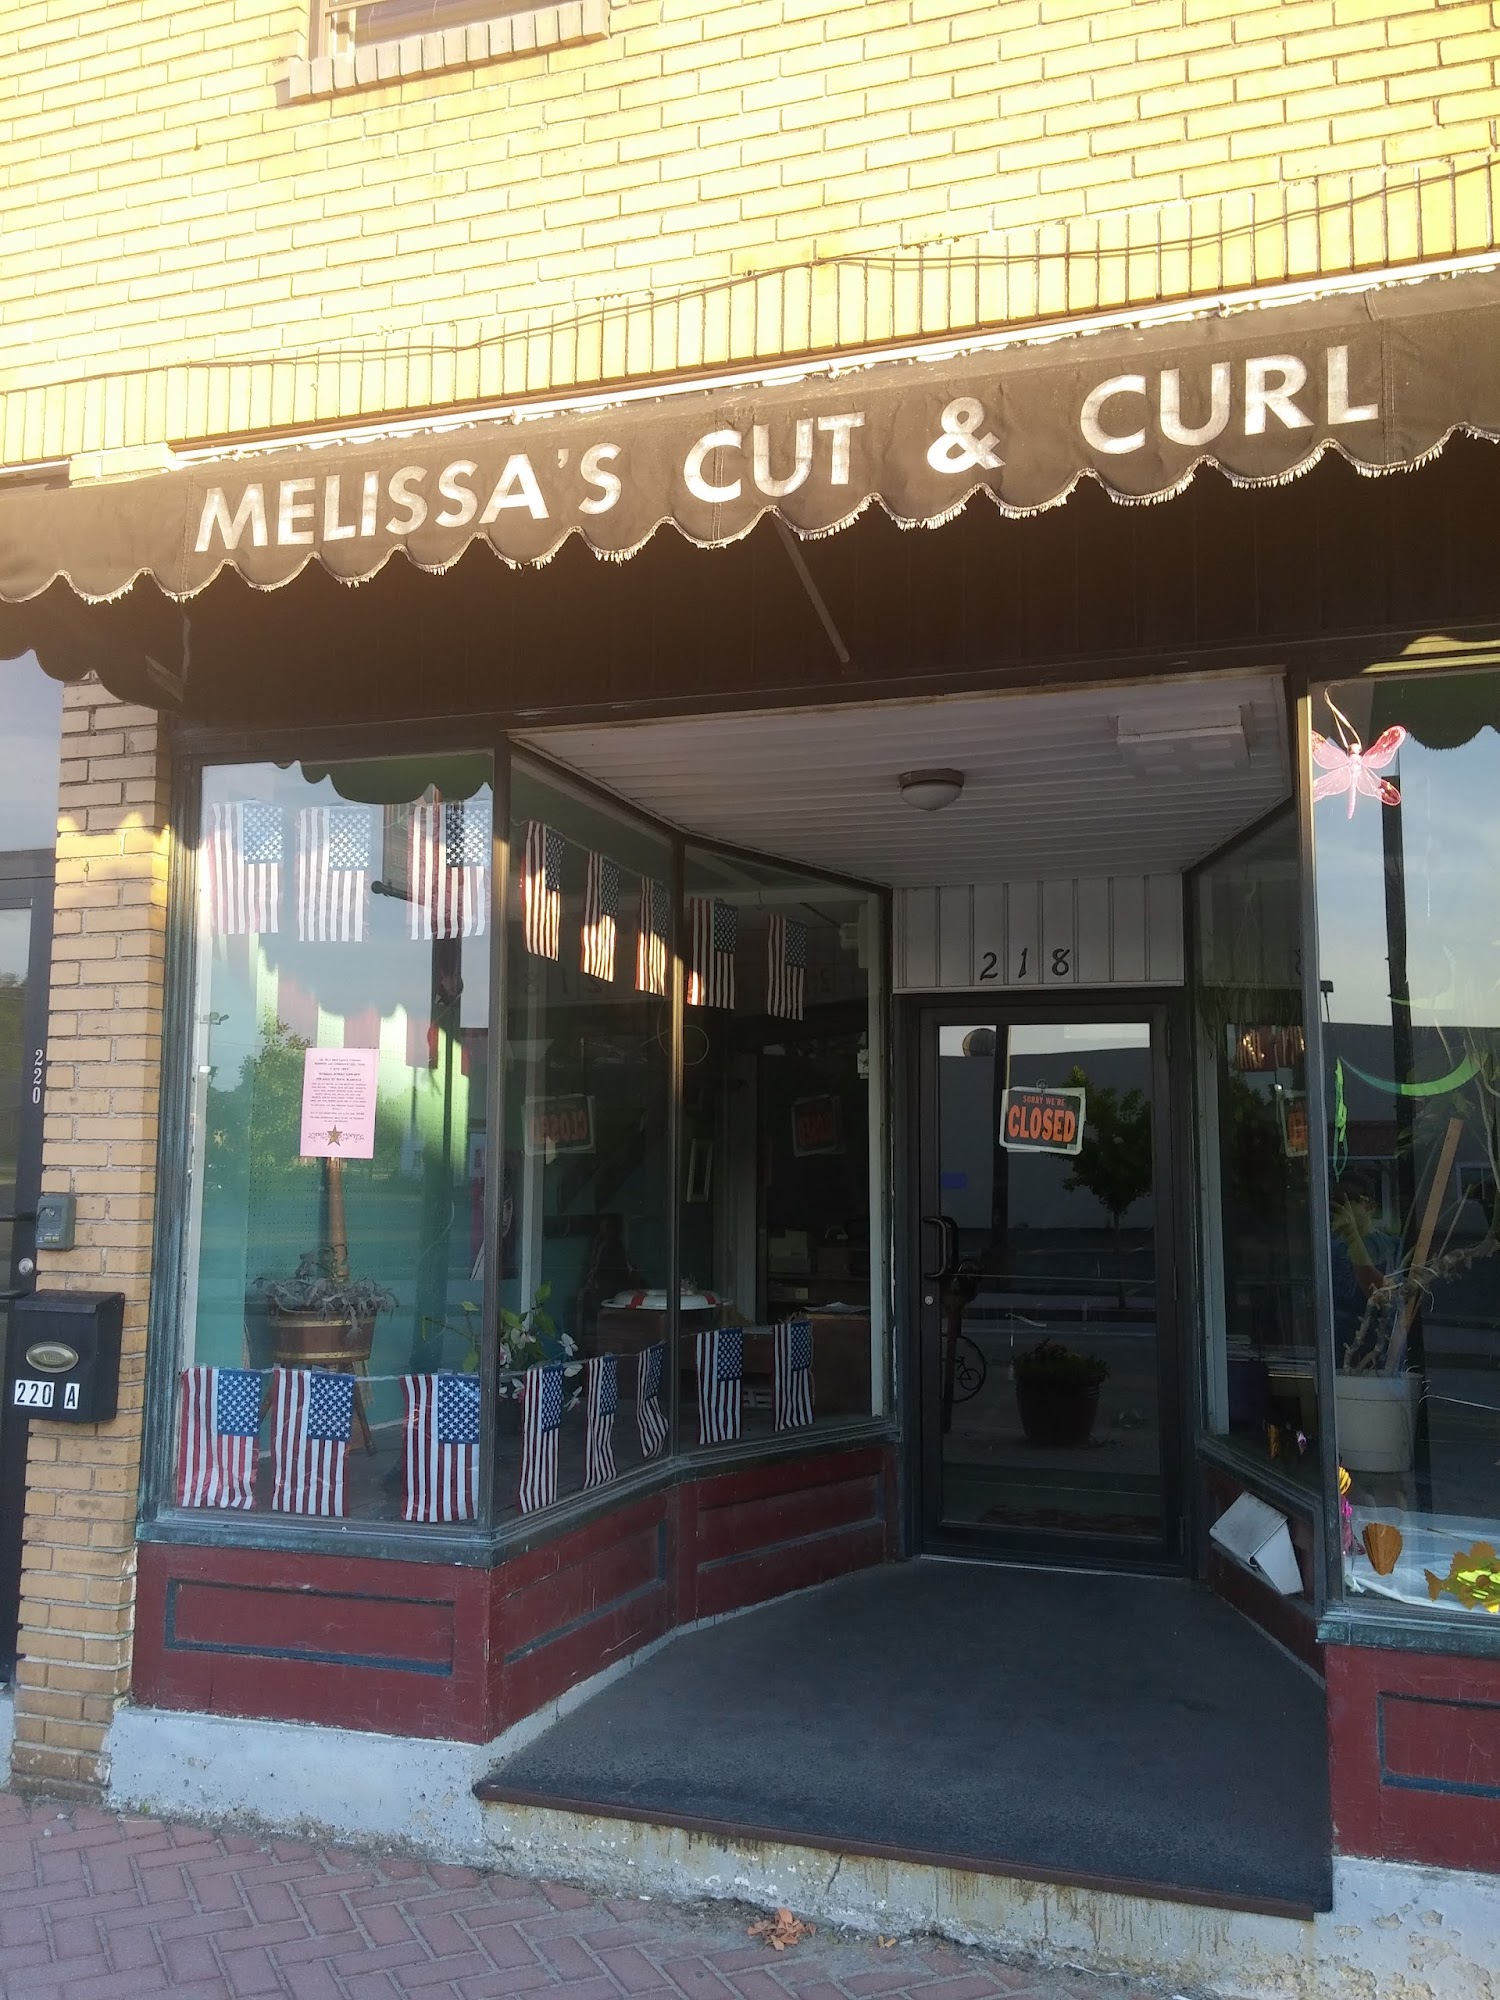 Melissa's Cut N Curl 218 E Market St, Blairsville Pennsylvania 15717